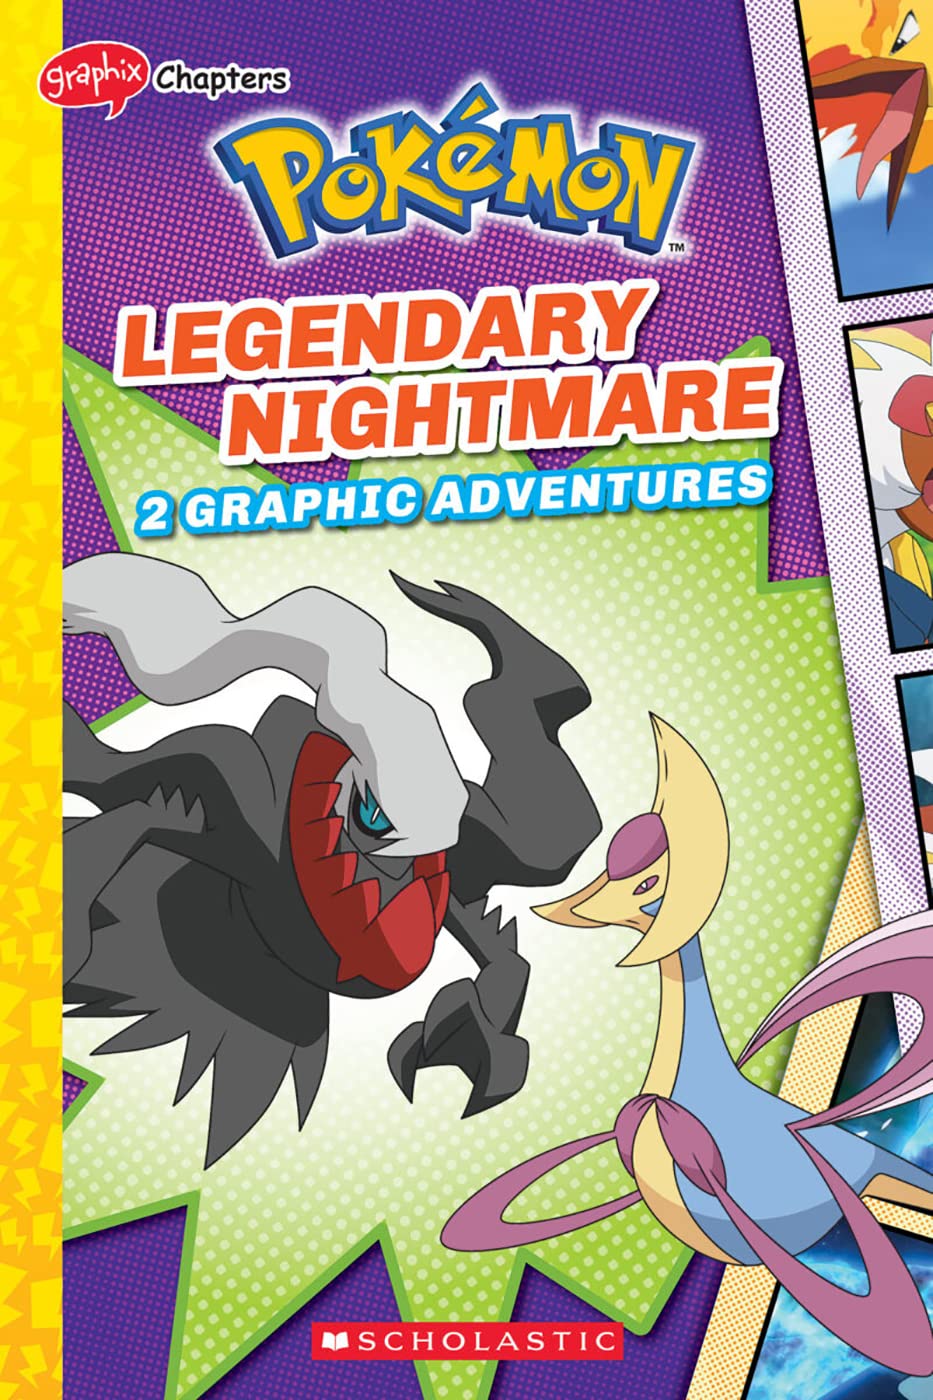 Pokemon: Legendary Nightmare 2 Graphic Adventures